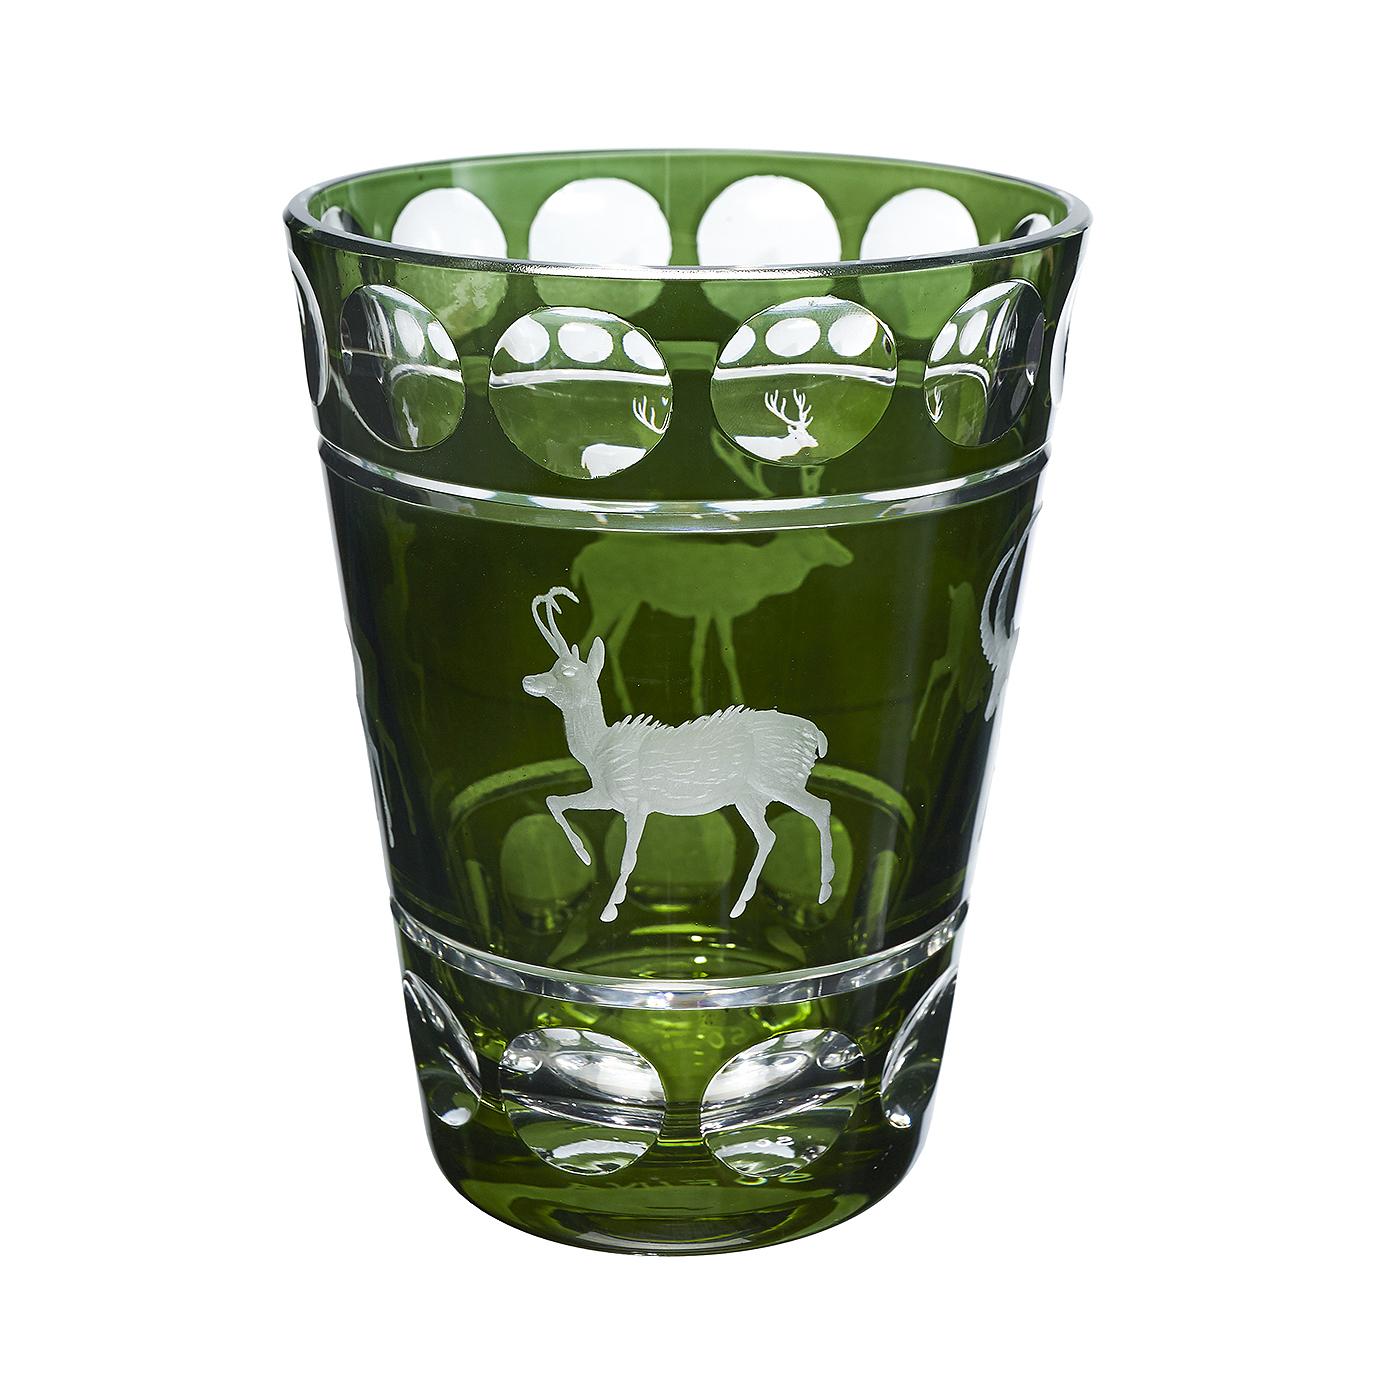 Hand-Carved Black Forest Vase Crystal with Hunting Decor Green Sofina Boutique Kitzbuehel